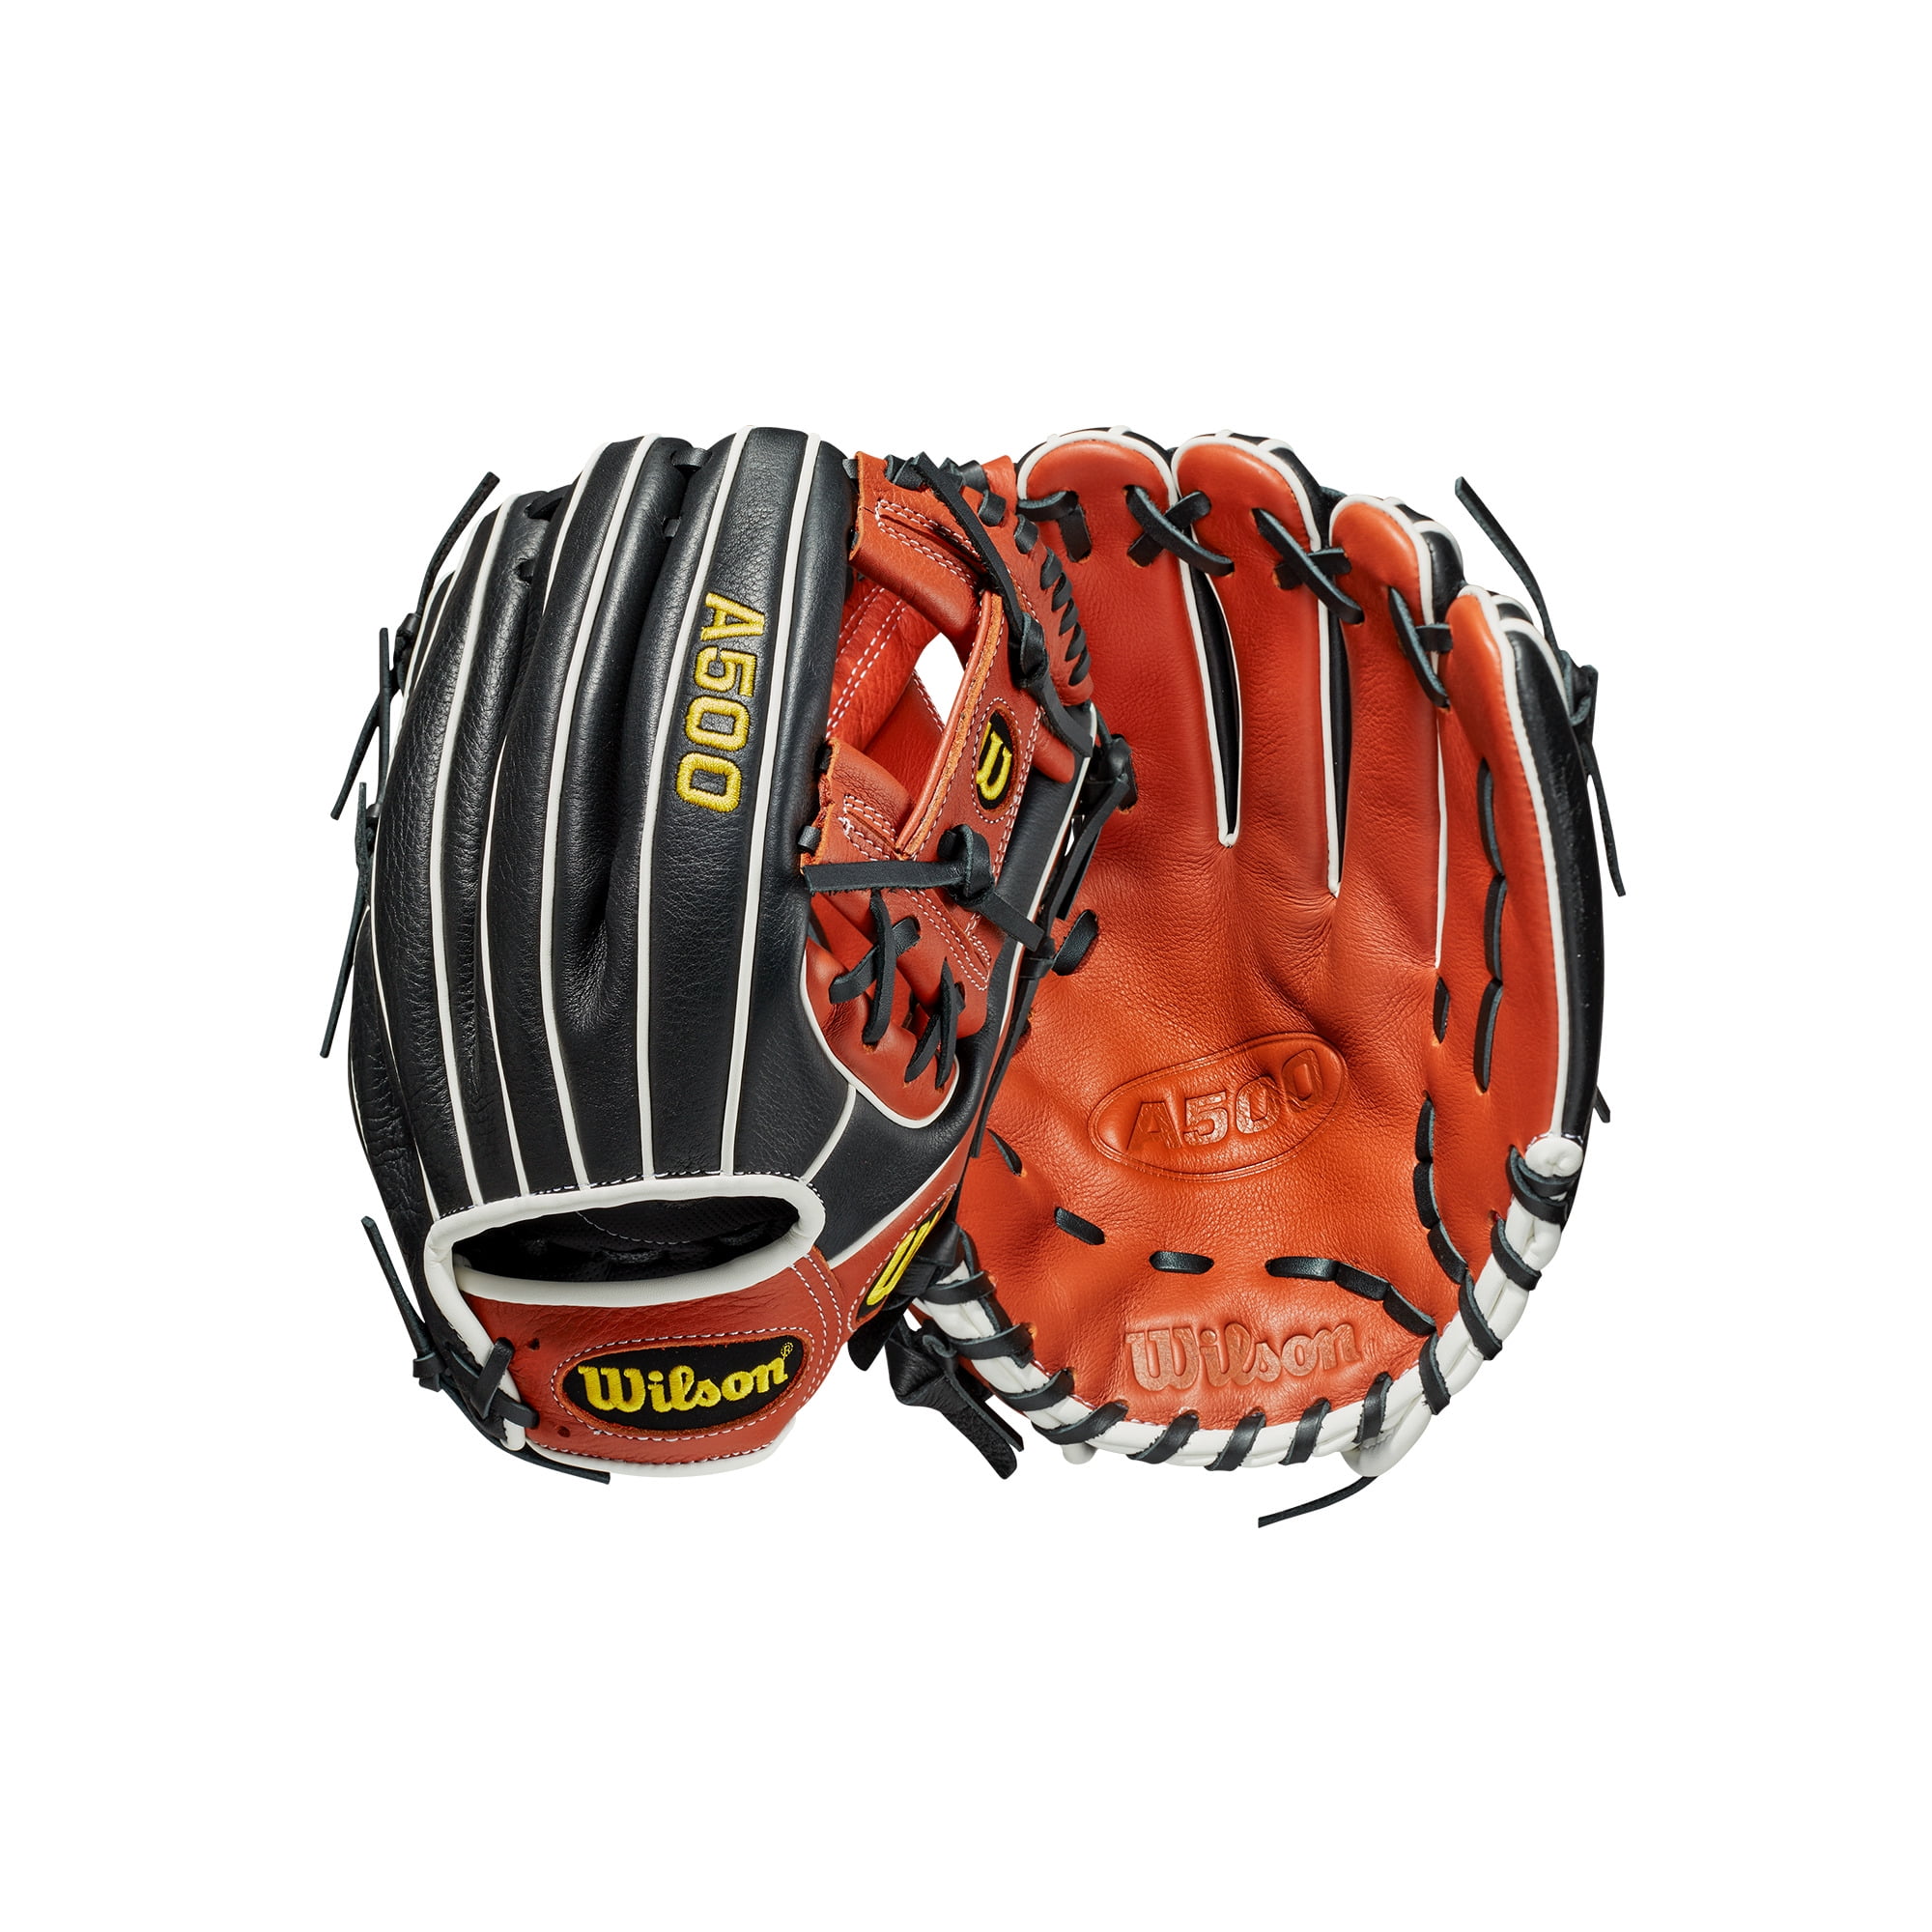 Wilson A500 Baseball Glove Series